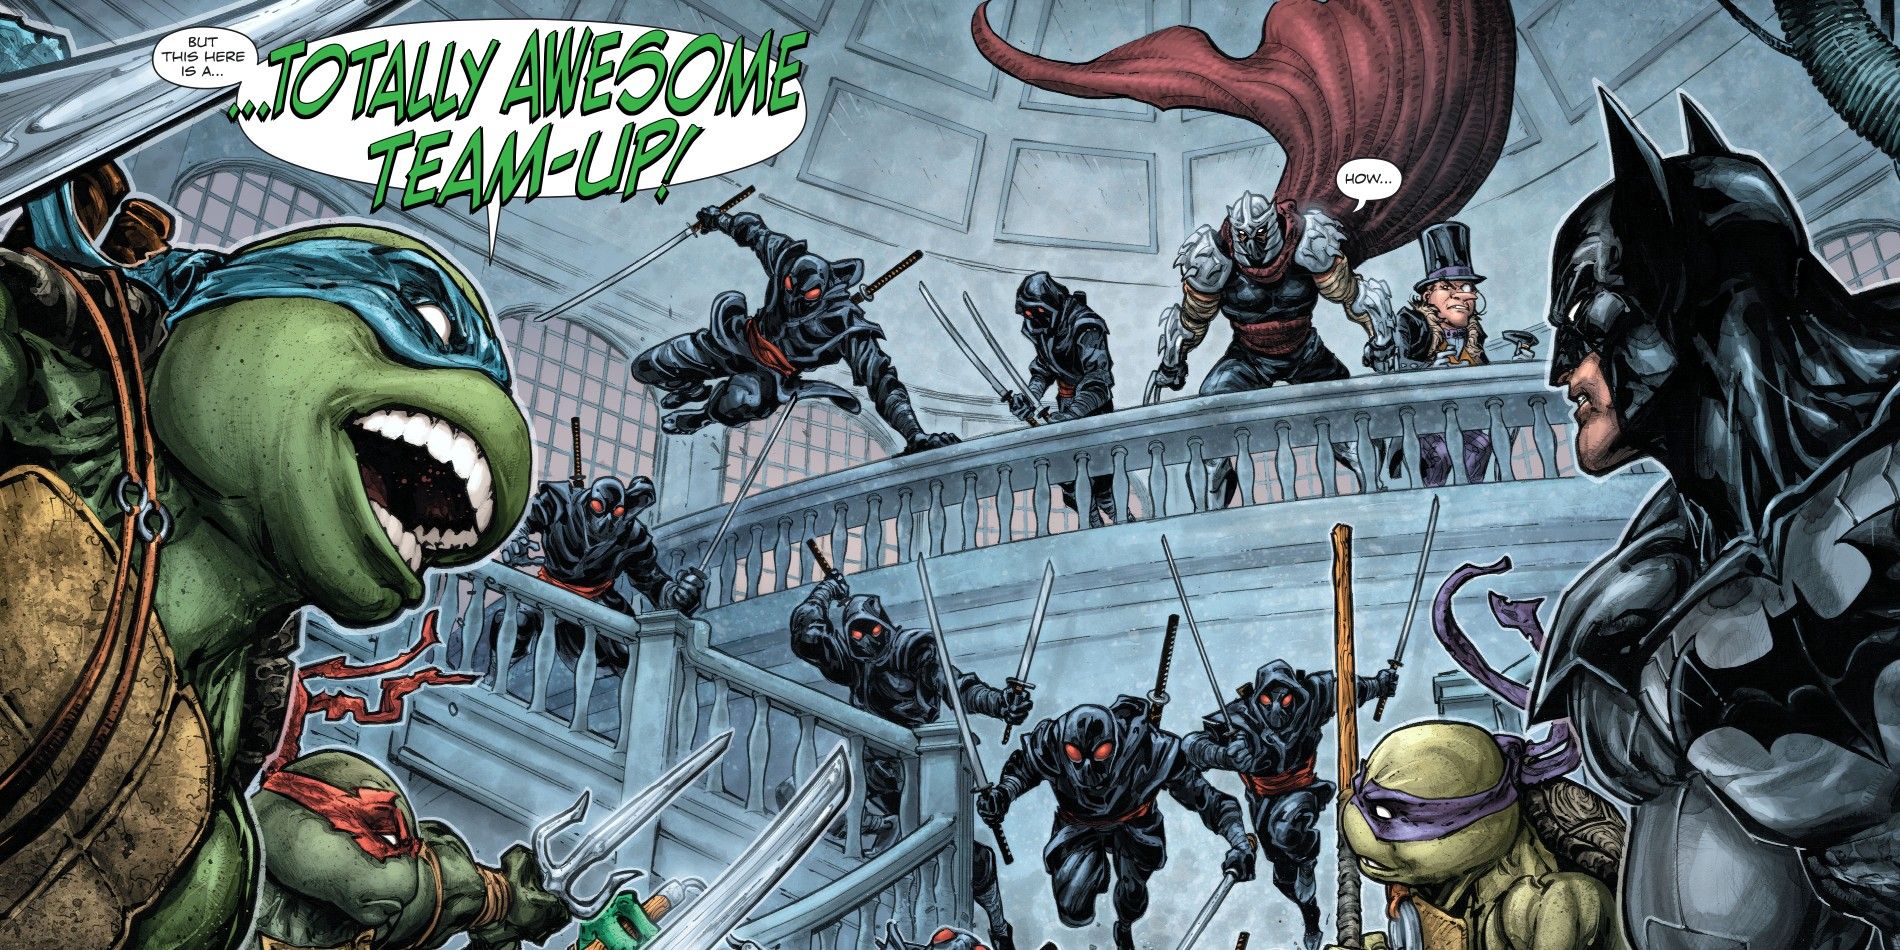 Batman vs. Teenage Mutant Ninja Turtles Gets A Release Date